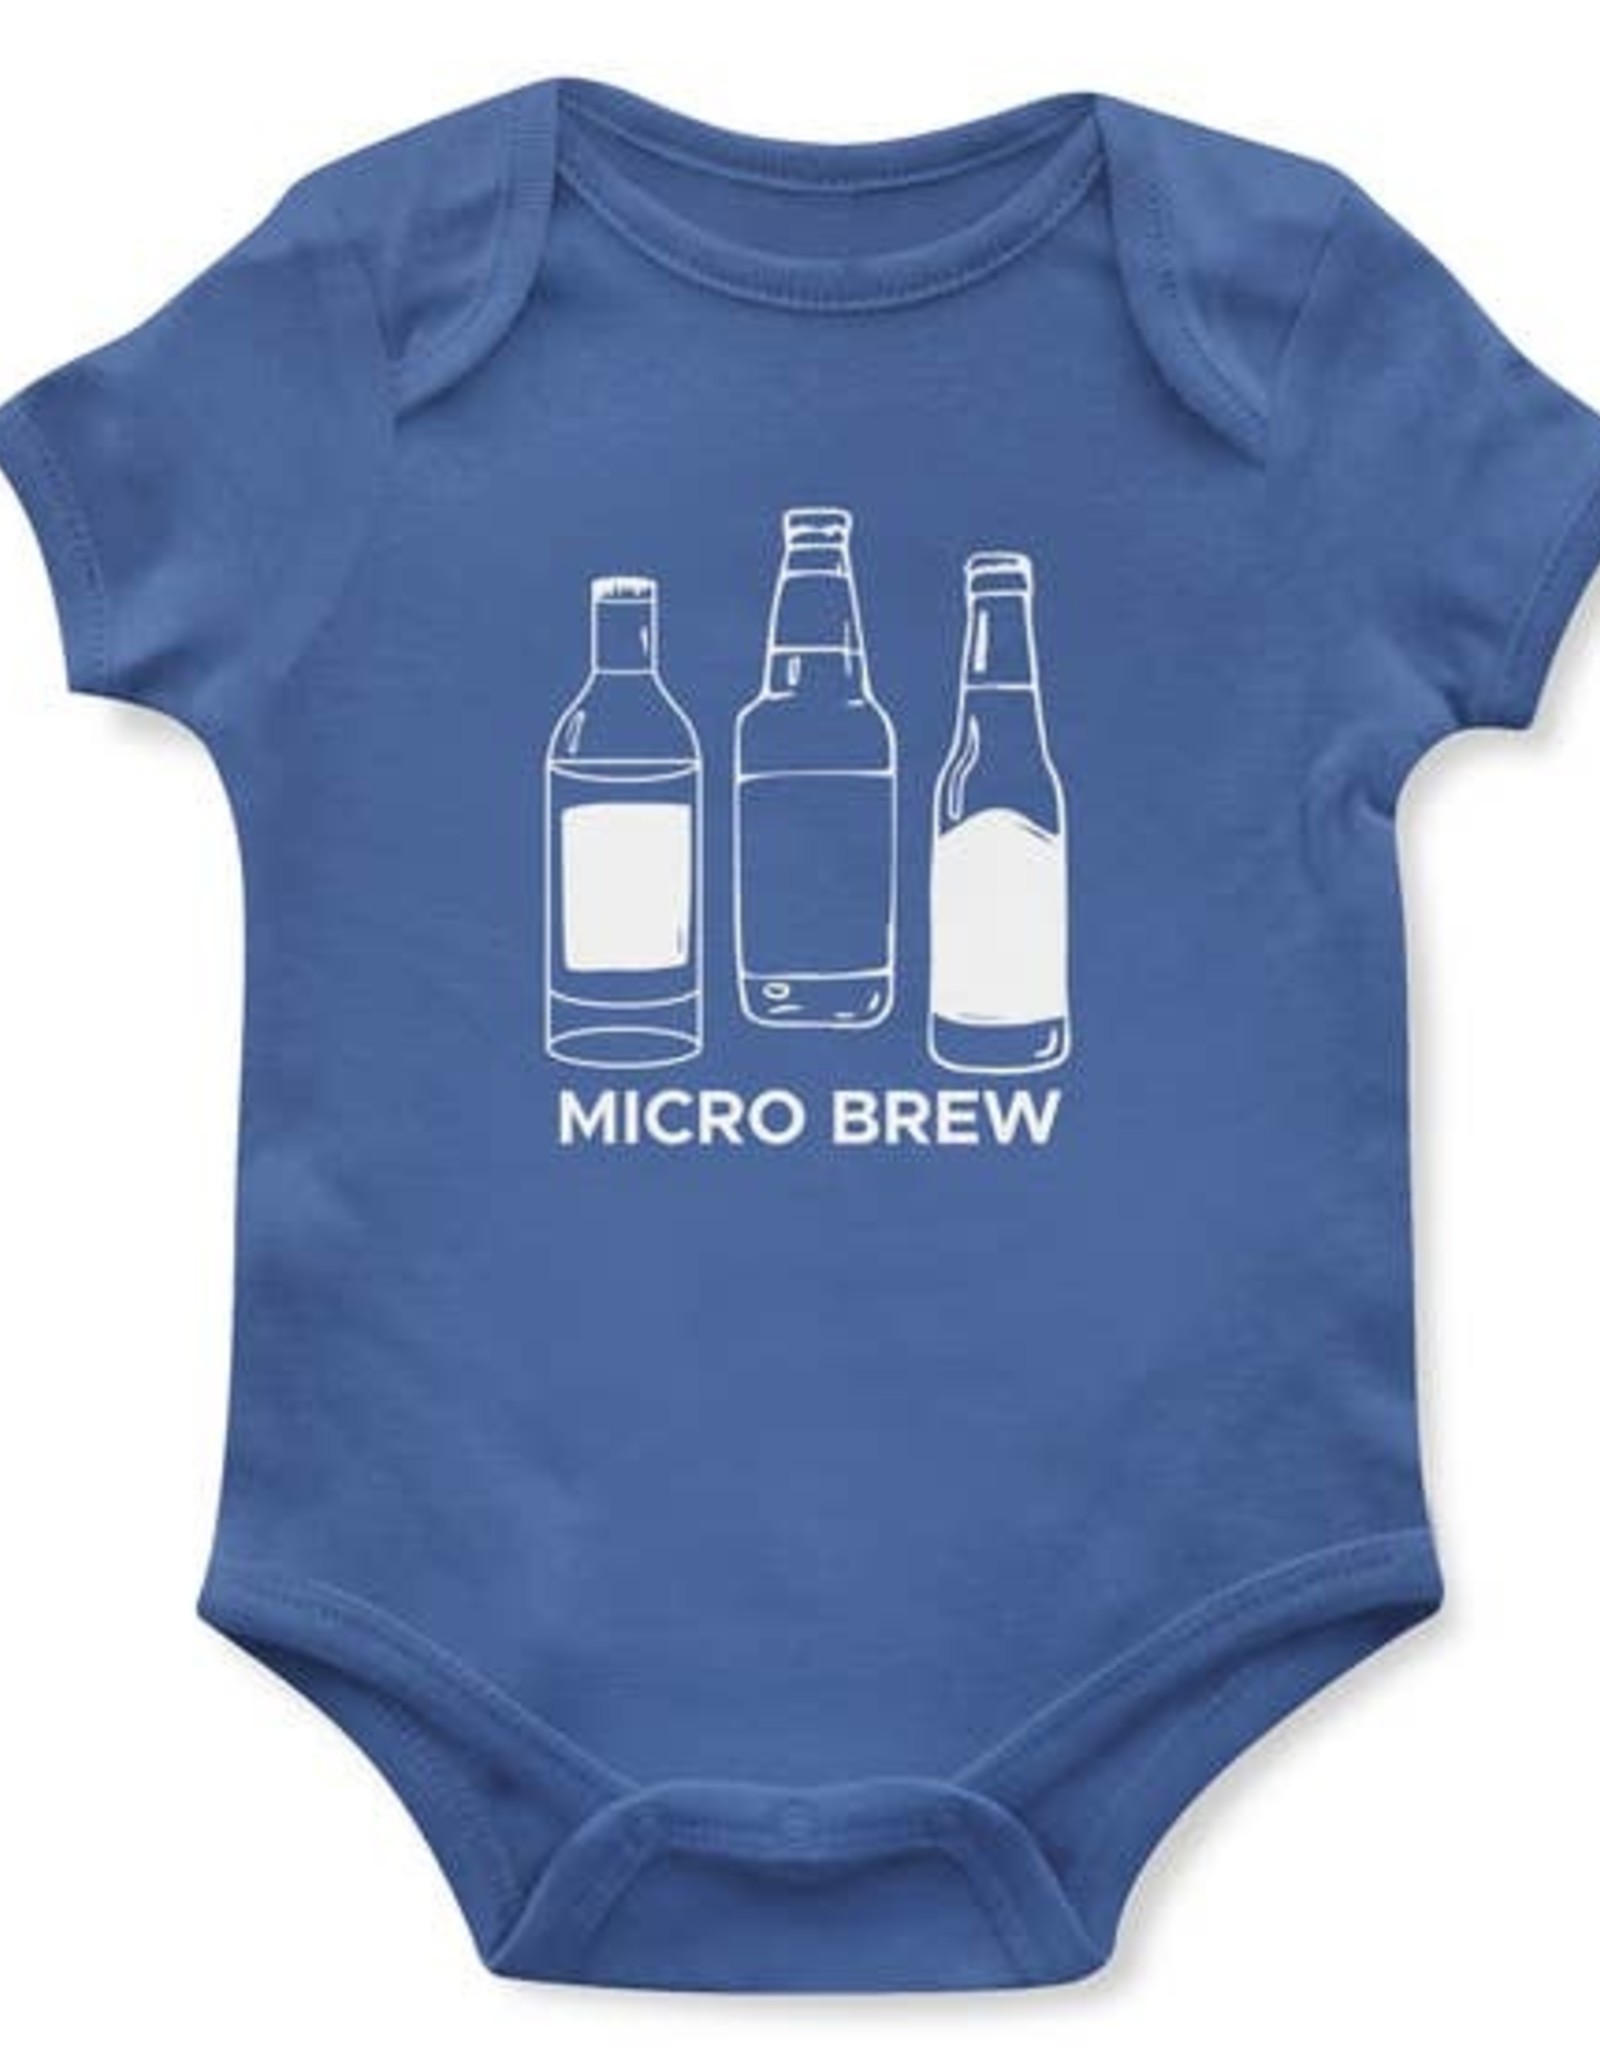 Wink Microbrew Baby Onesie